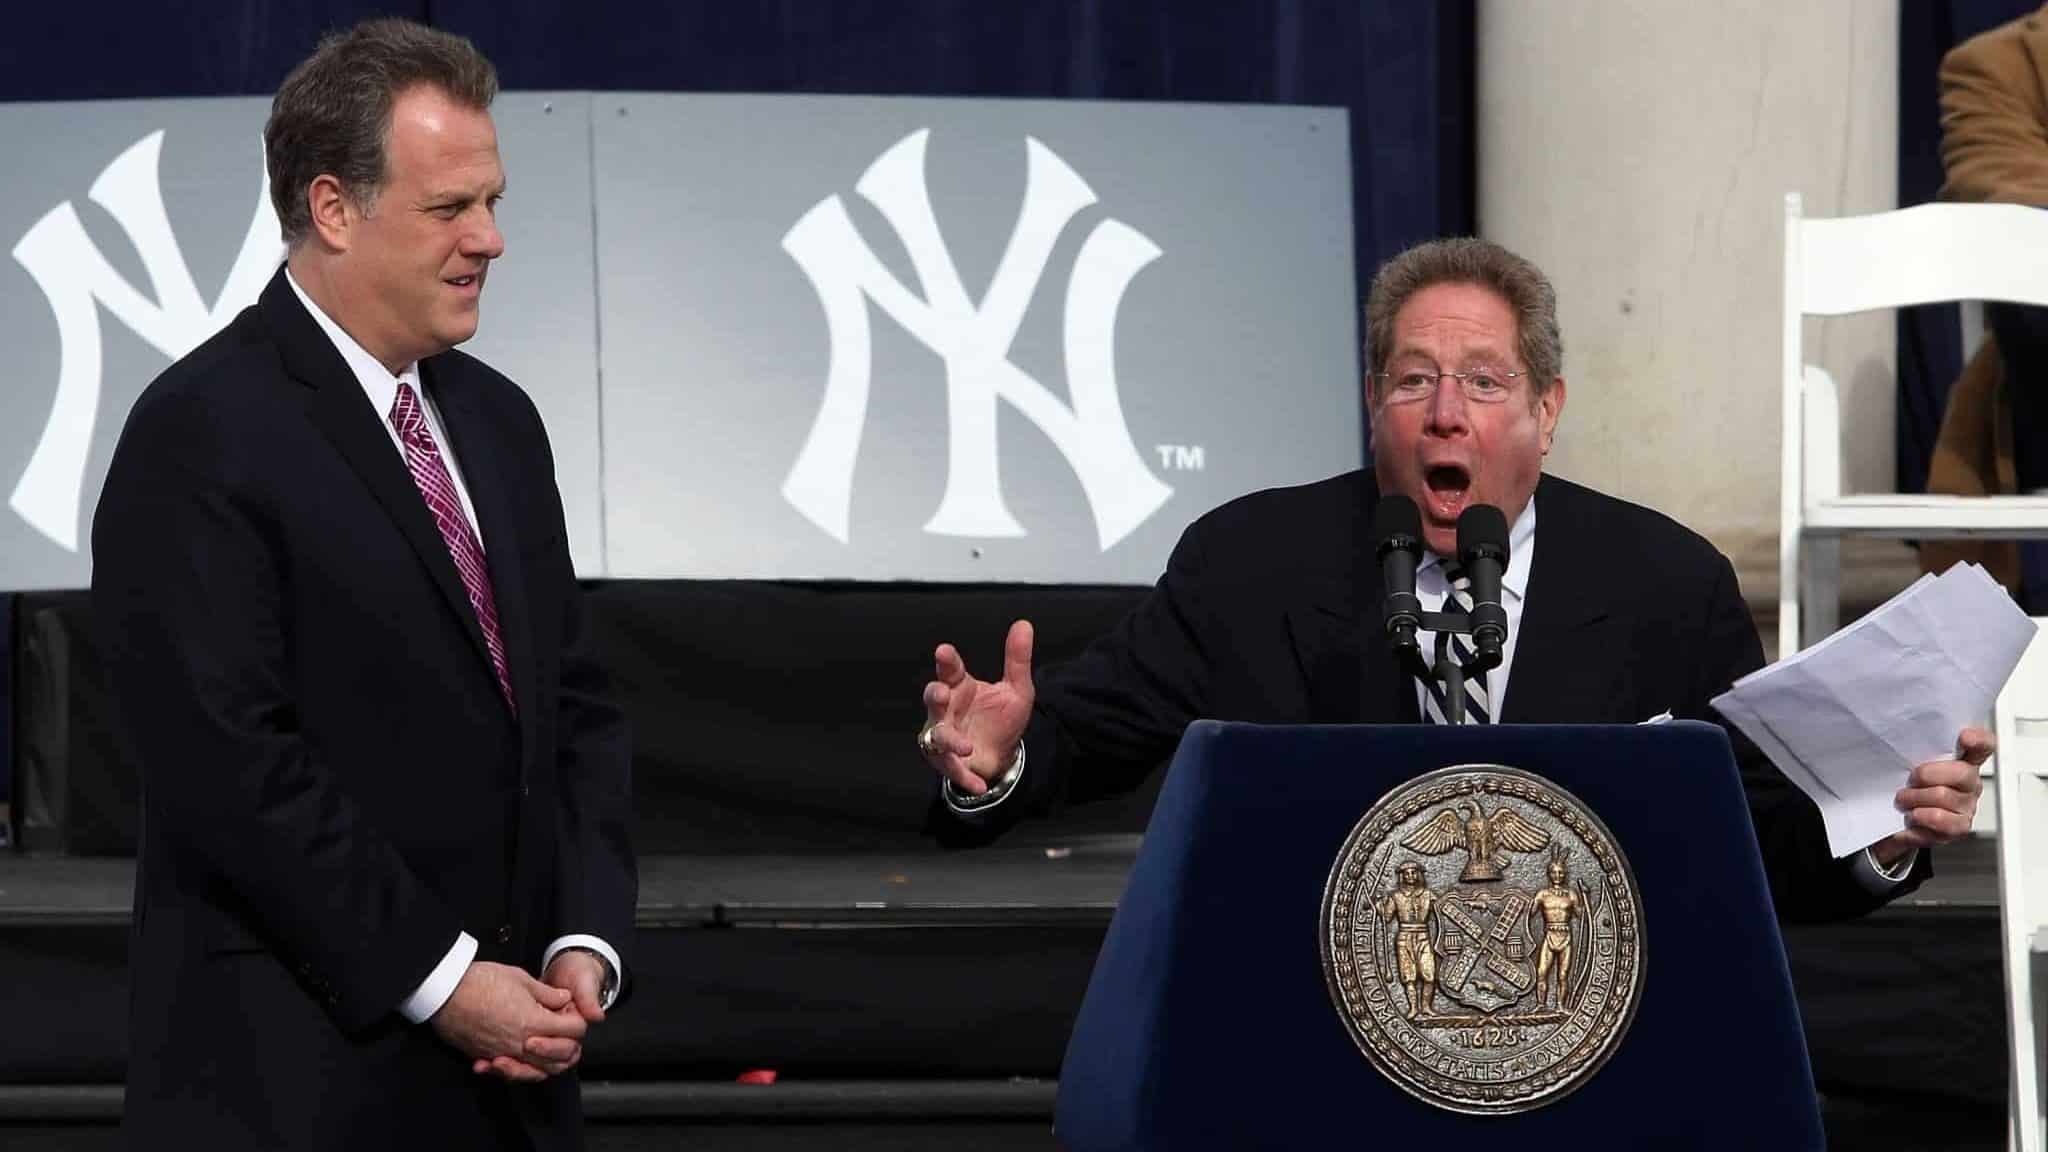 NEW YORK - NOVEMBER 06: New York Yankees broadcasters Michael Kay (L) and John Sterling speak during the New York Yankees World Series Victory Celebration at City Hall on November 6, 2009 in New York, New York.